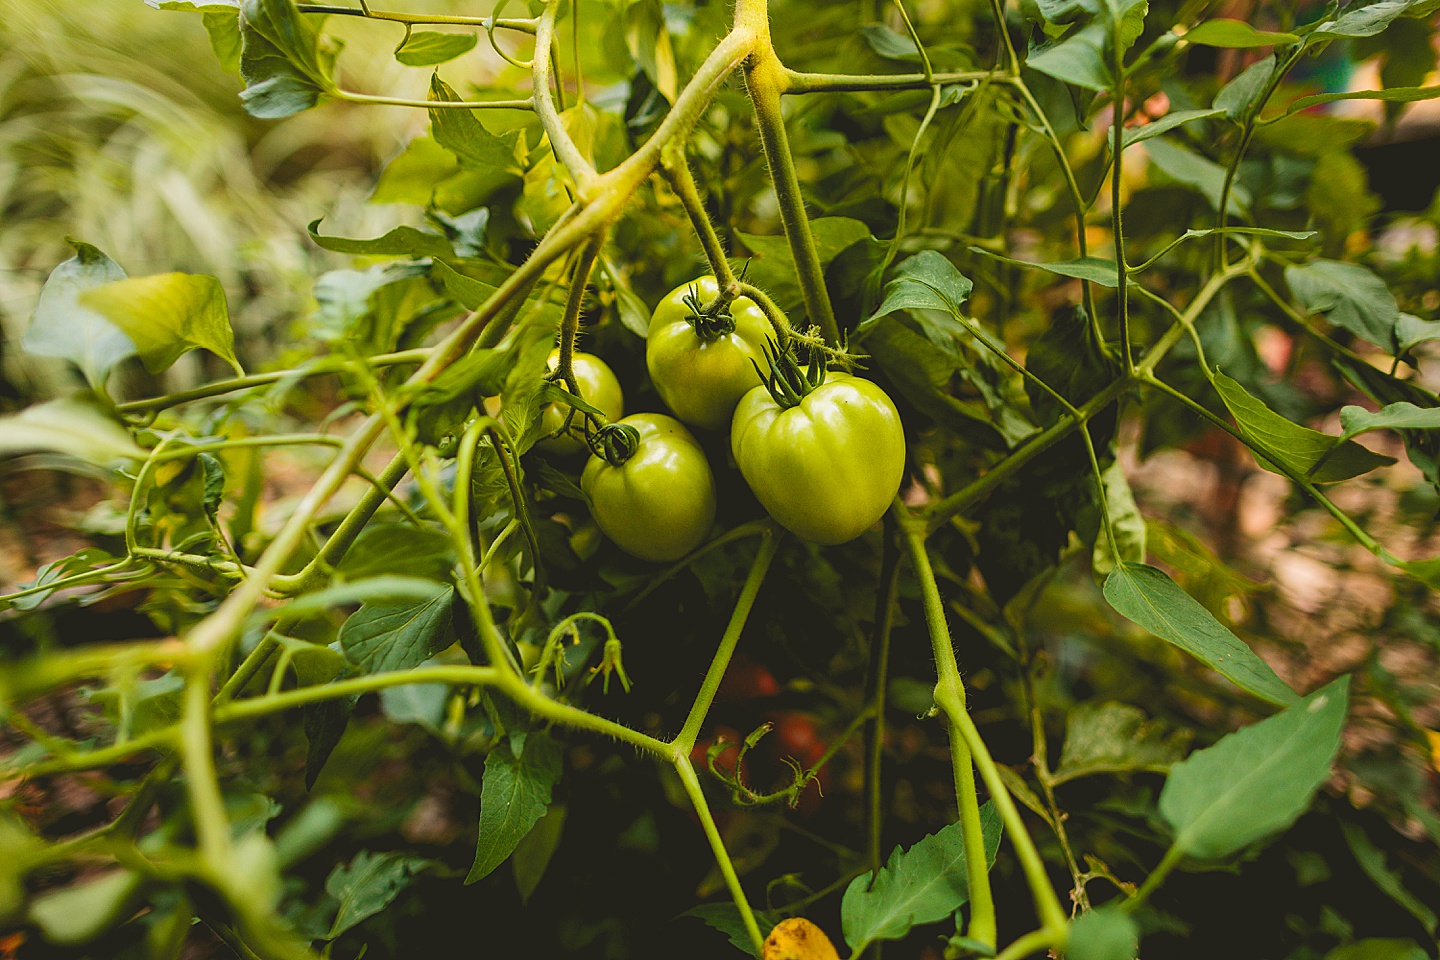 Green tomato plants